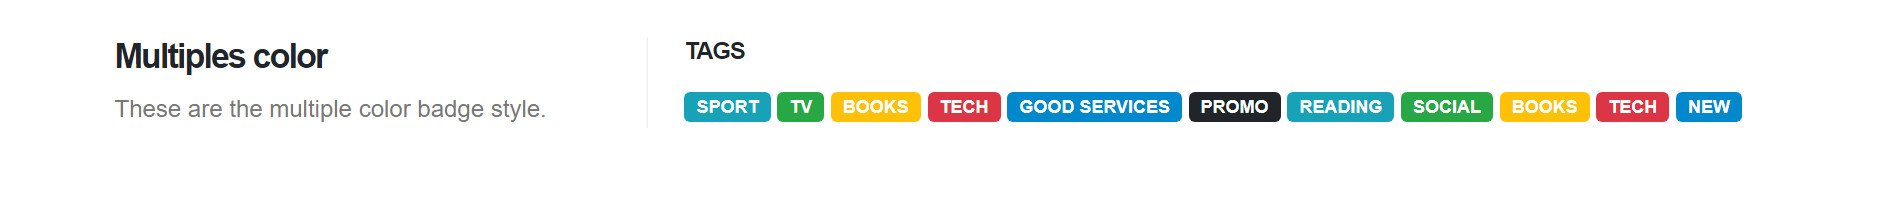 Shortcodes Tags - multiple color แนะนำ เว็บไซต์สำเร็จรูป NineNIC